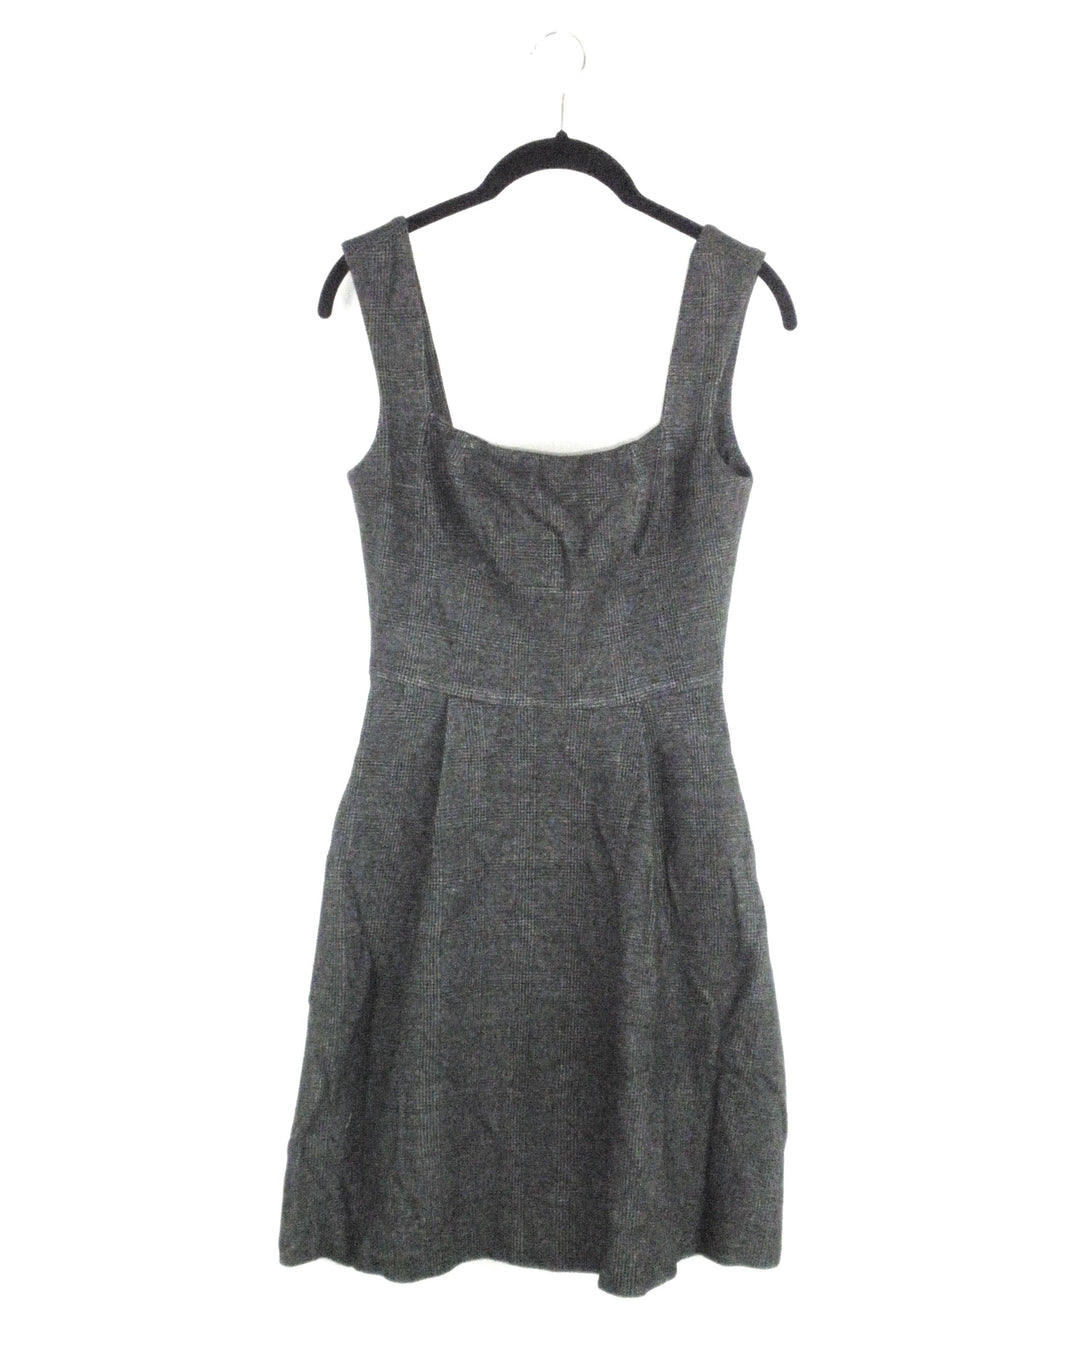 Amanda Uprichard Fit and Flare Heathered Grey Dress - Small - The Fashion Foundation - {{ discount designer}}